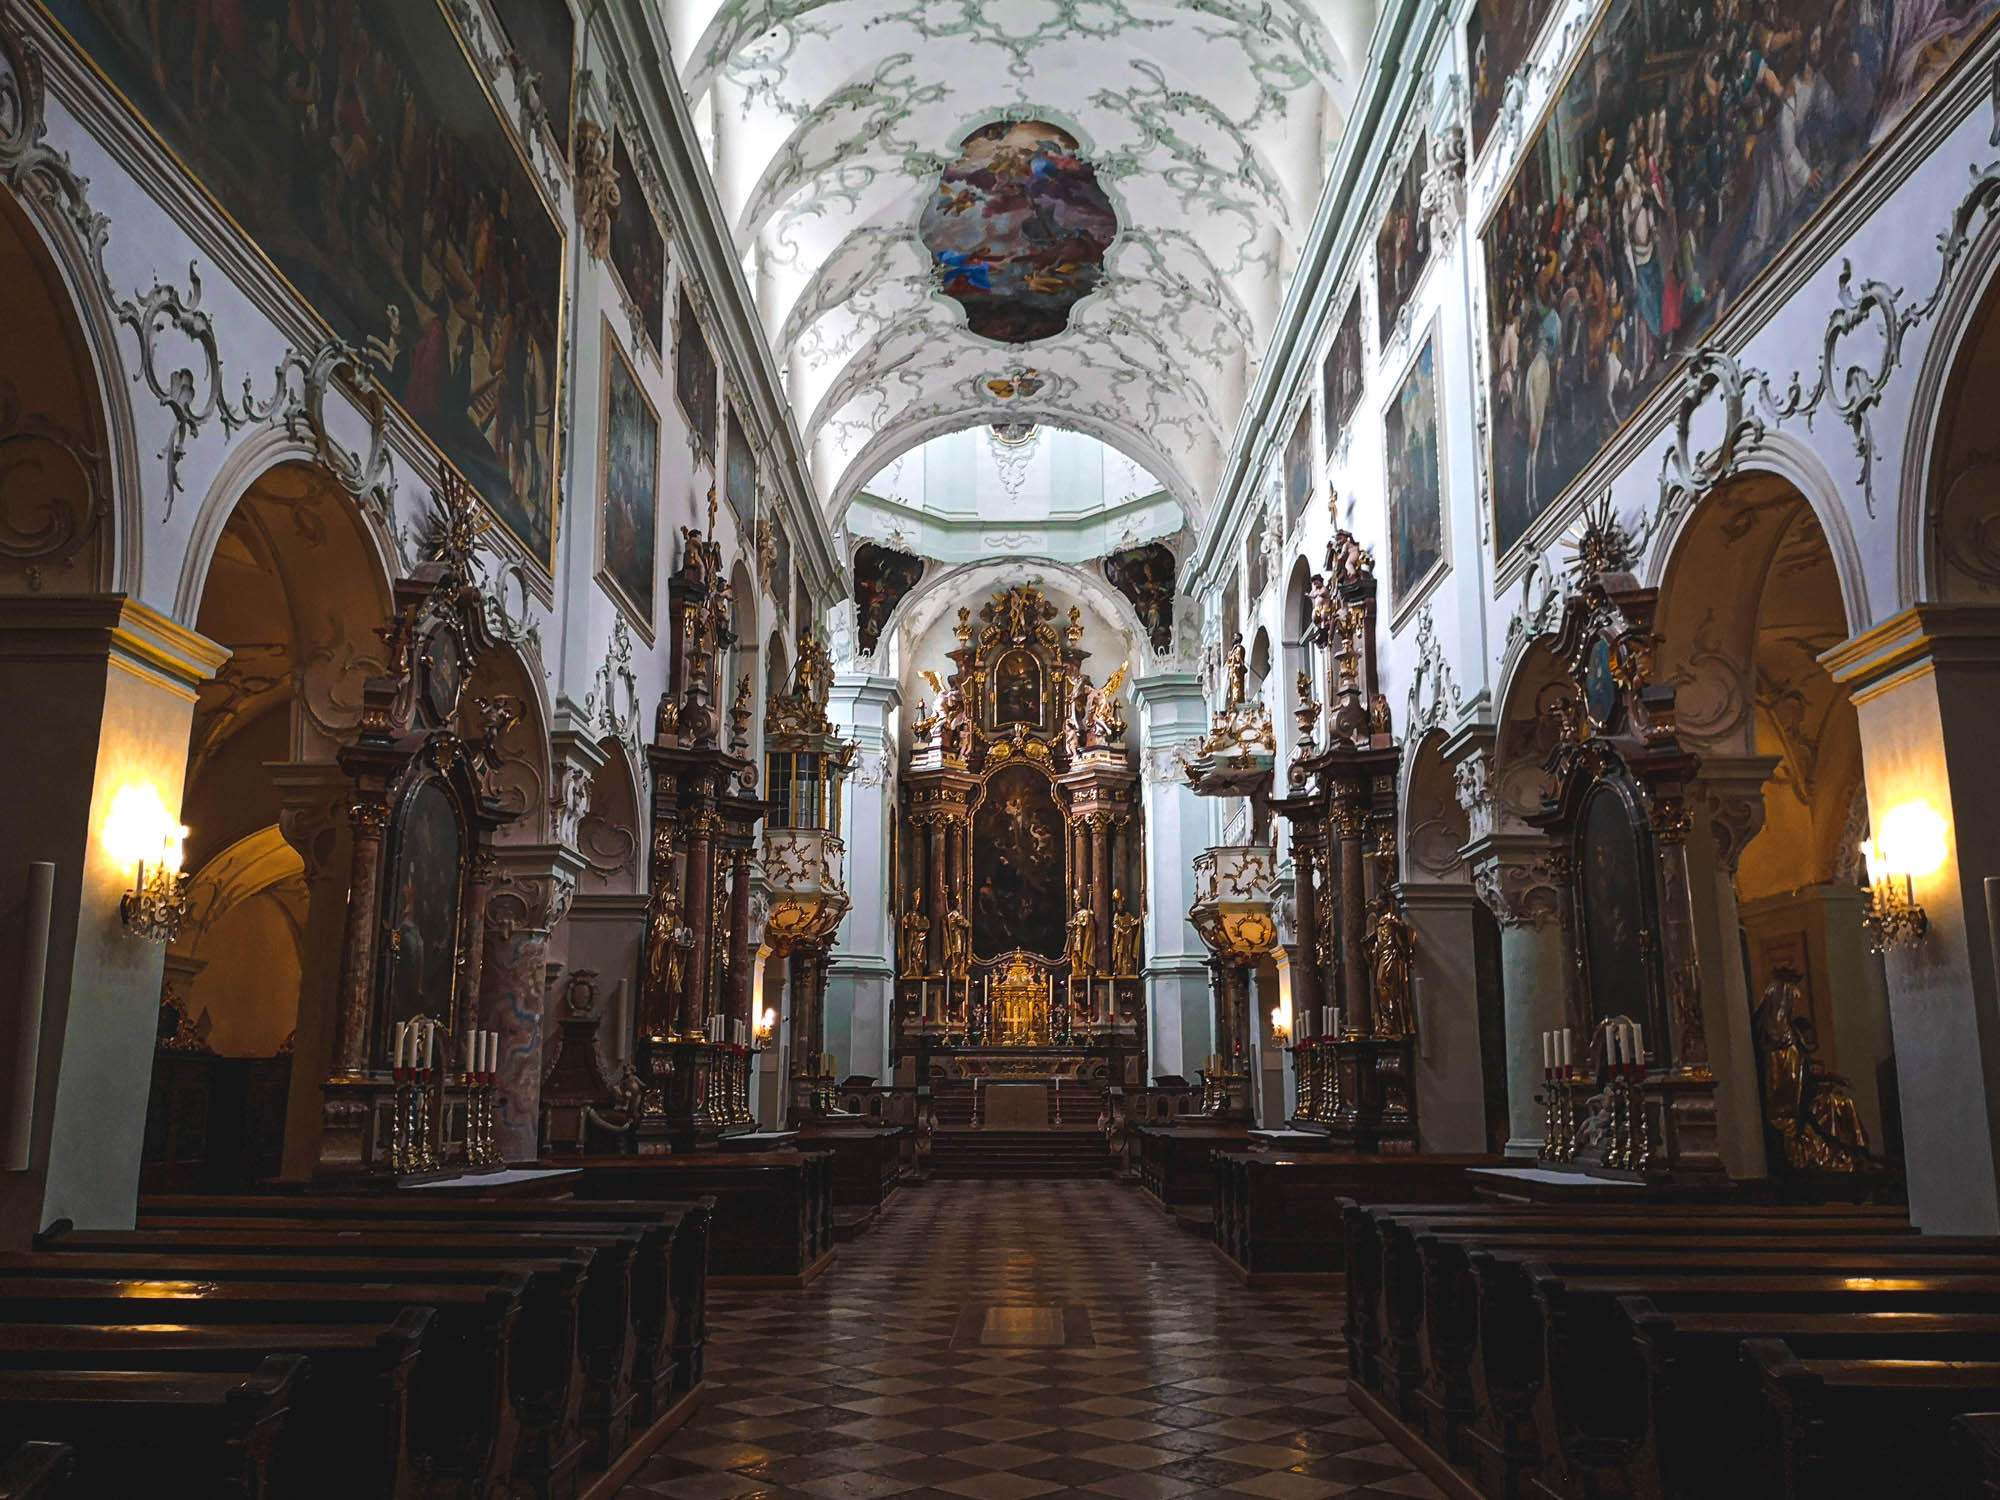 The interior of St Peter Church in Salzburg, Austria